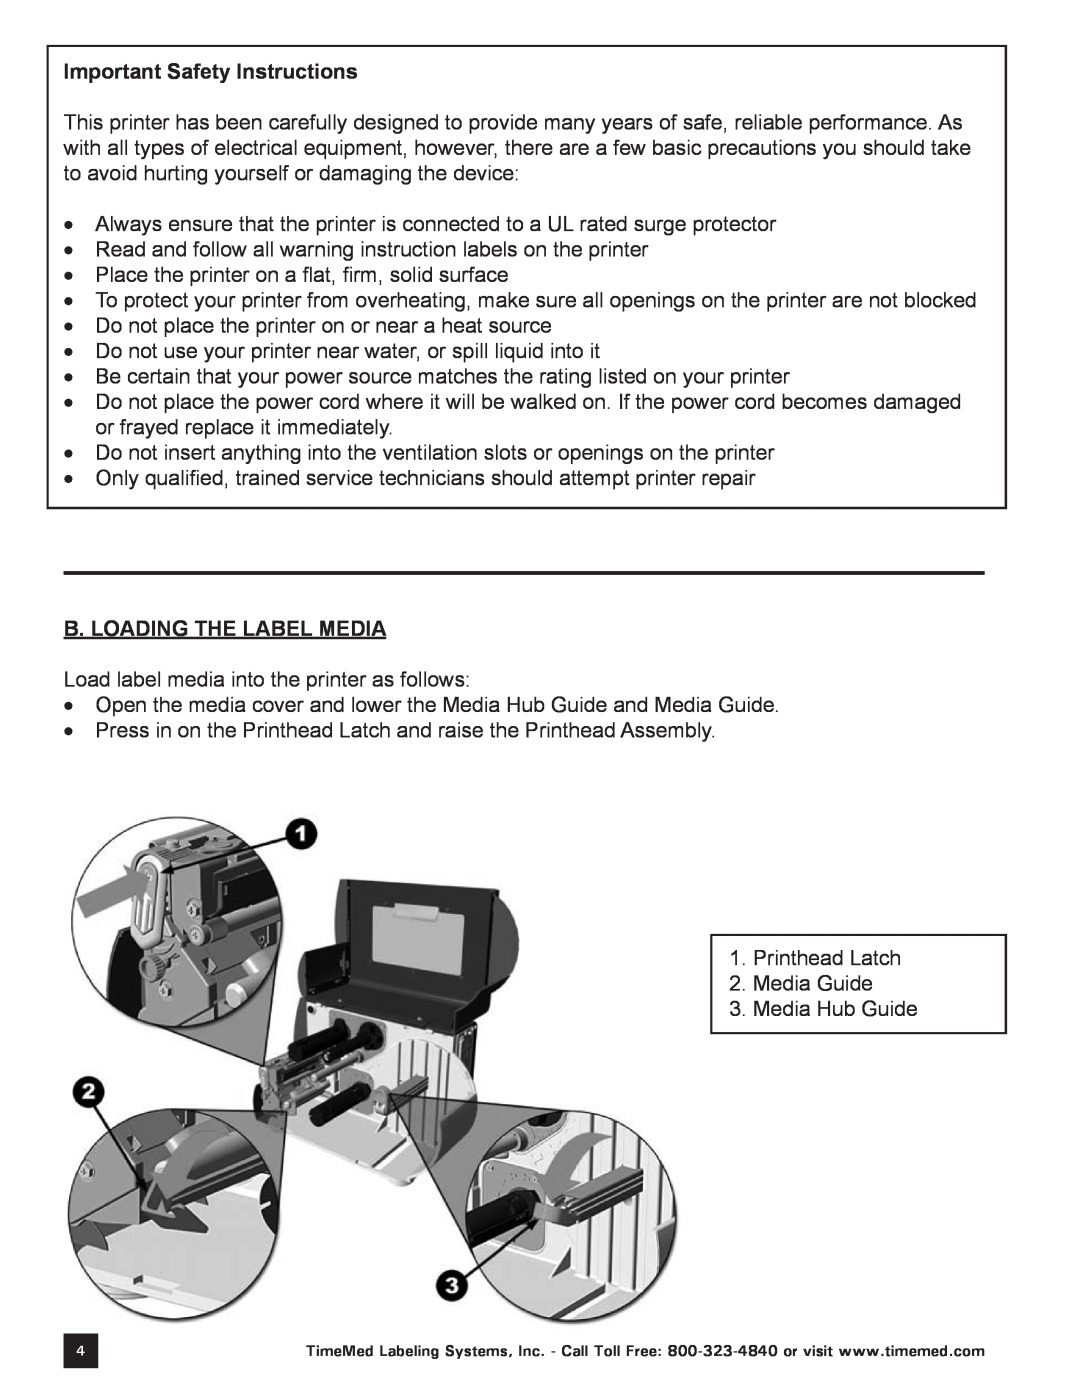 Keystone Computer Keyboard manual Important Safety Instructions, B. Loading the Label Media 